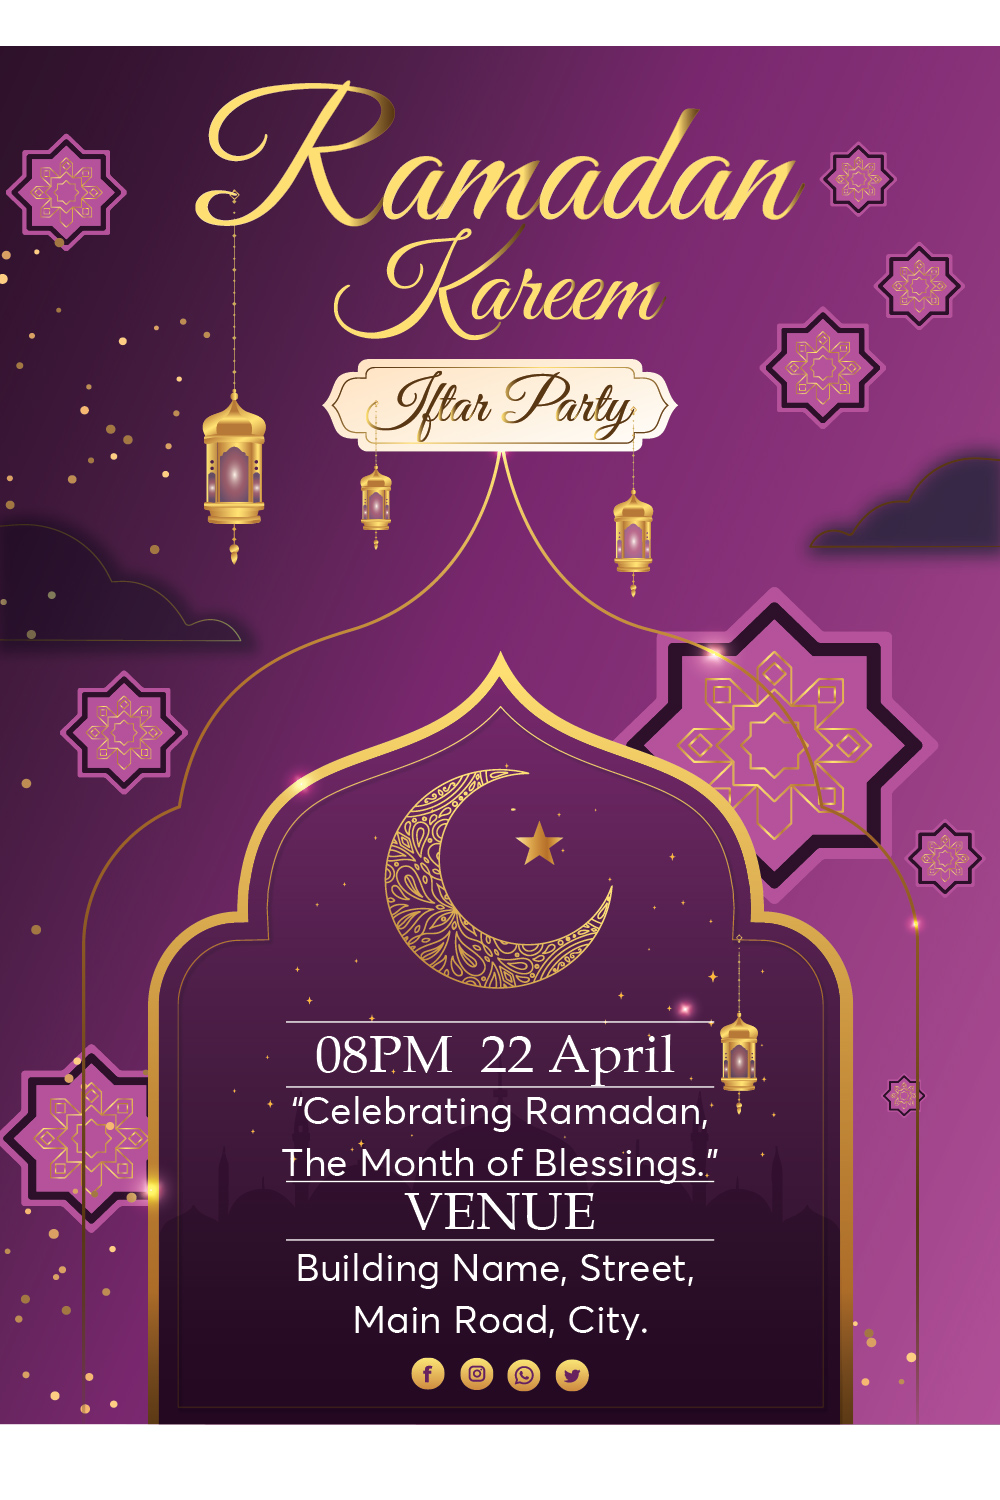 Ramadan Kareem Iftar Party Flyer pinterest preview image.